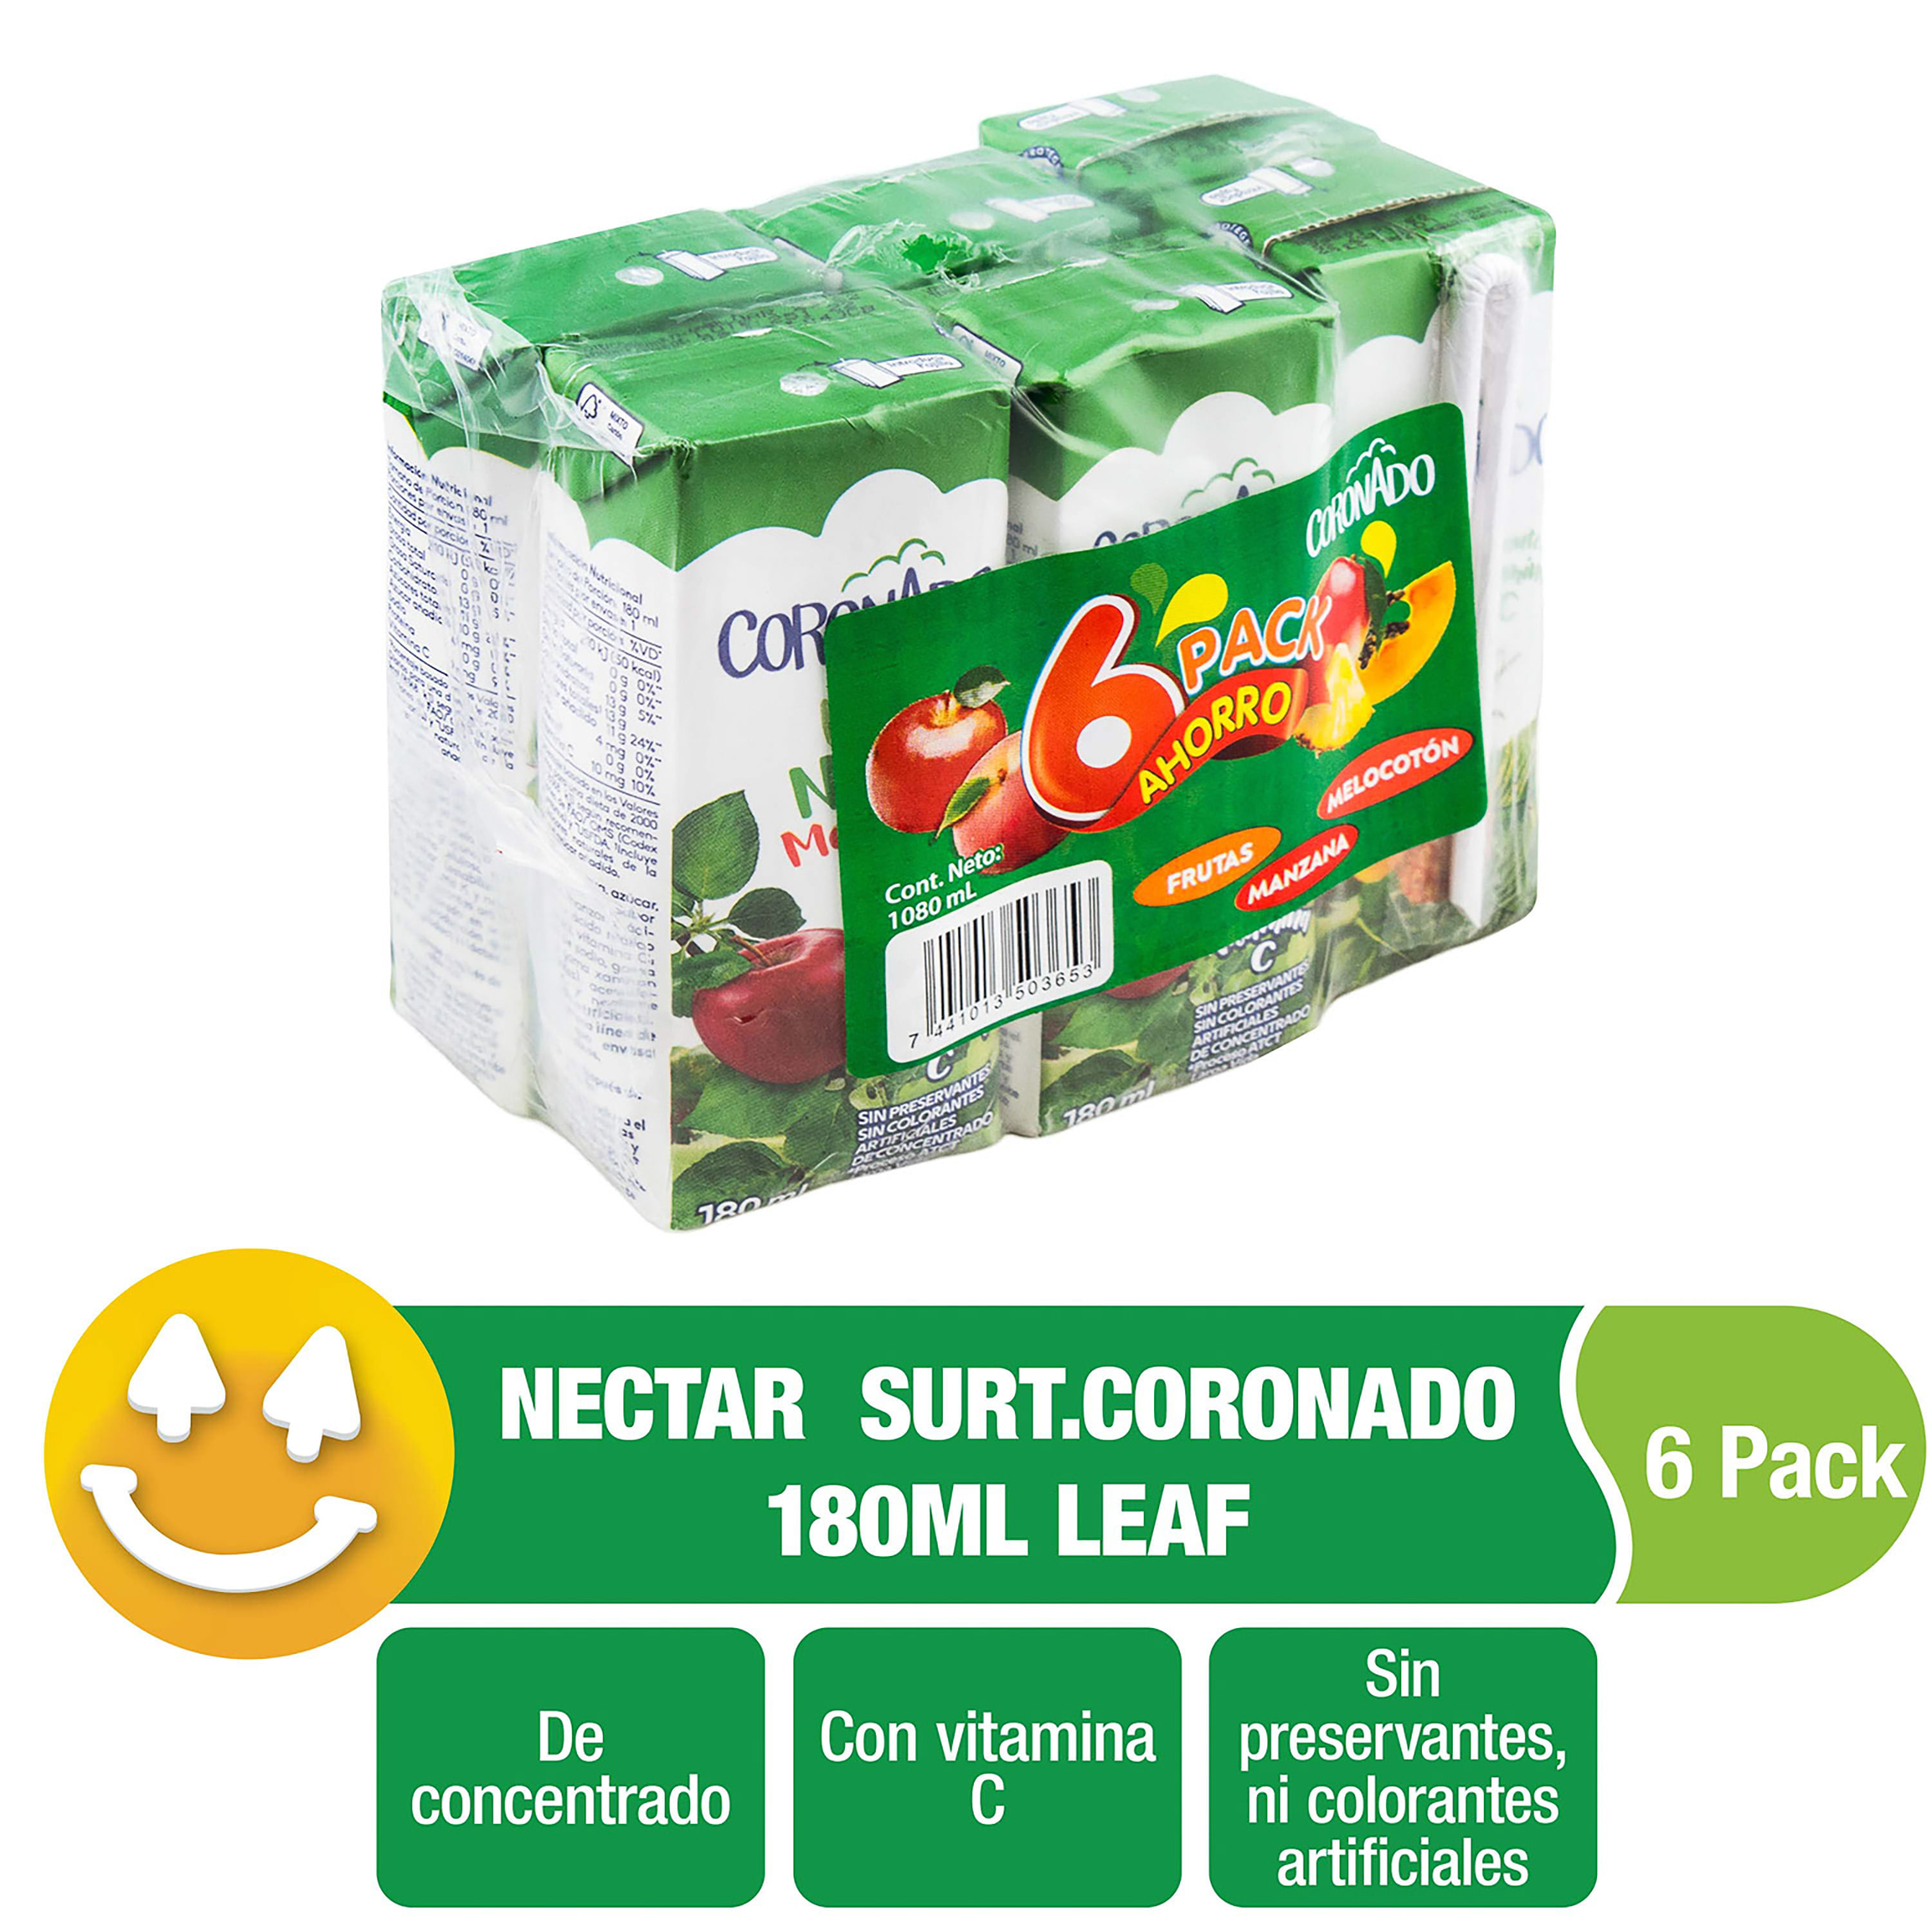 N-ctar-Marca-Coronado-Surtido-Con-Vitamina-C-6-pack-180ml-1-54778